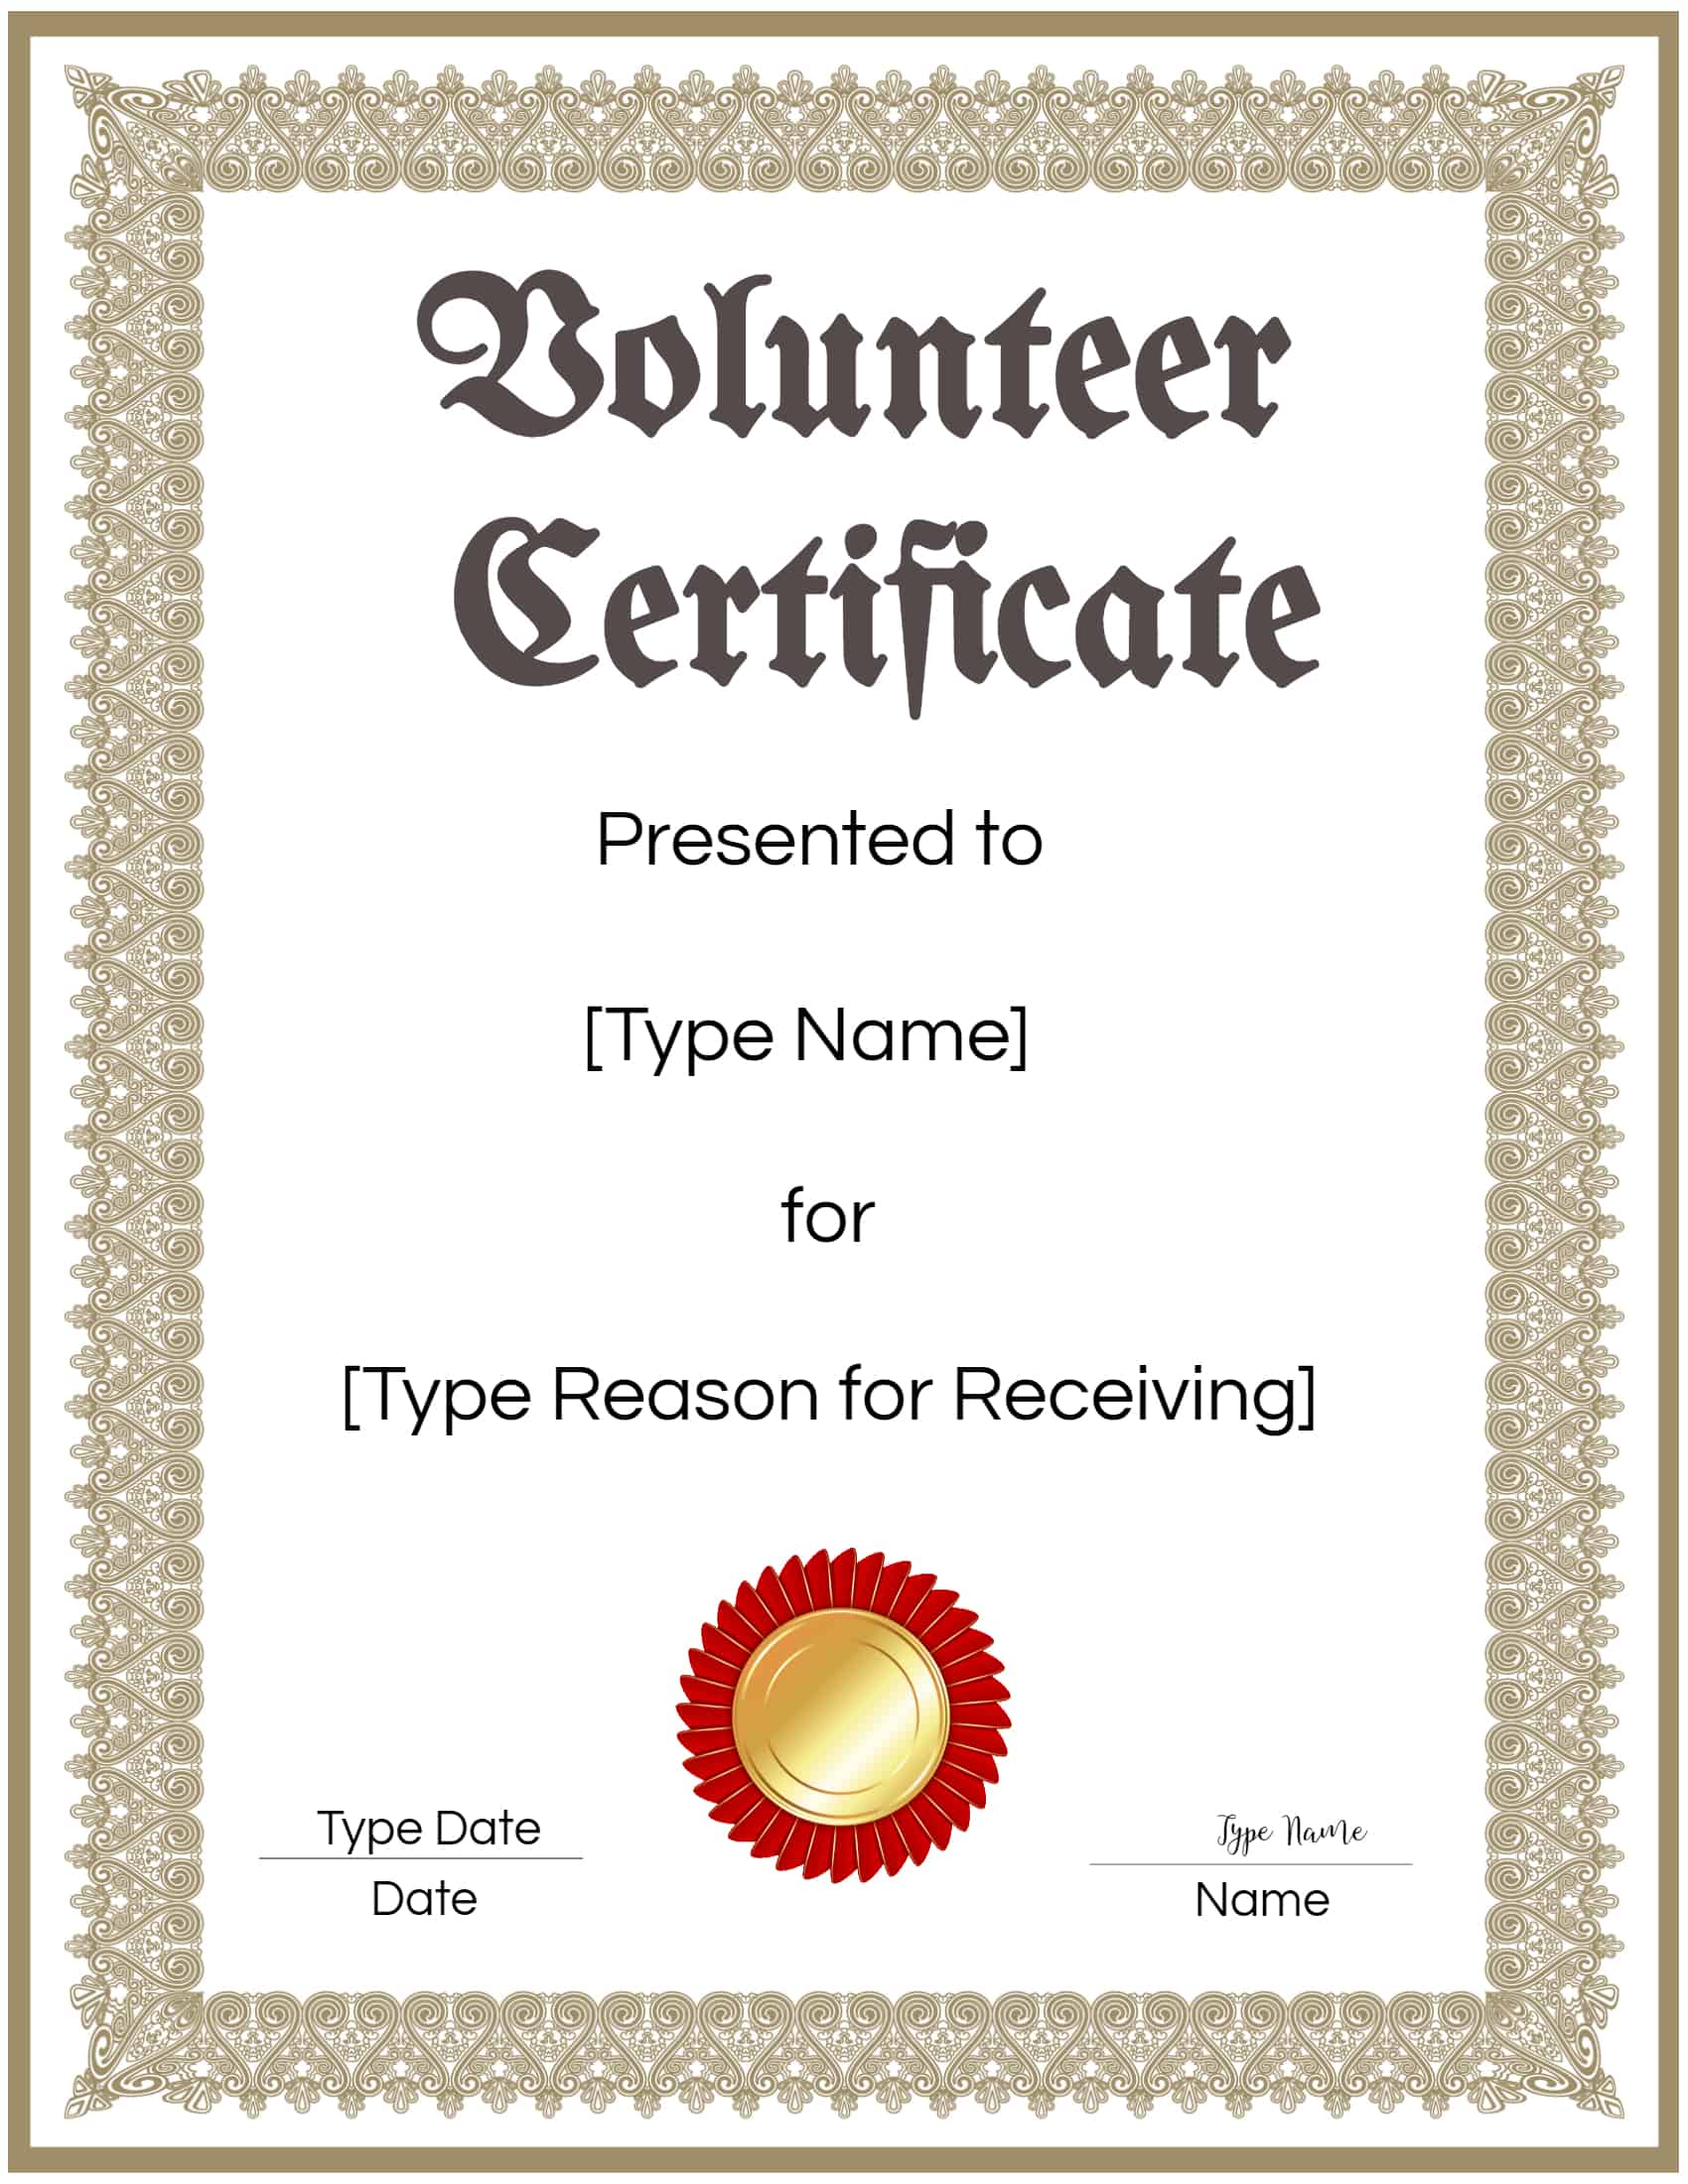 Volunteer Certificate Template Word